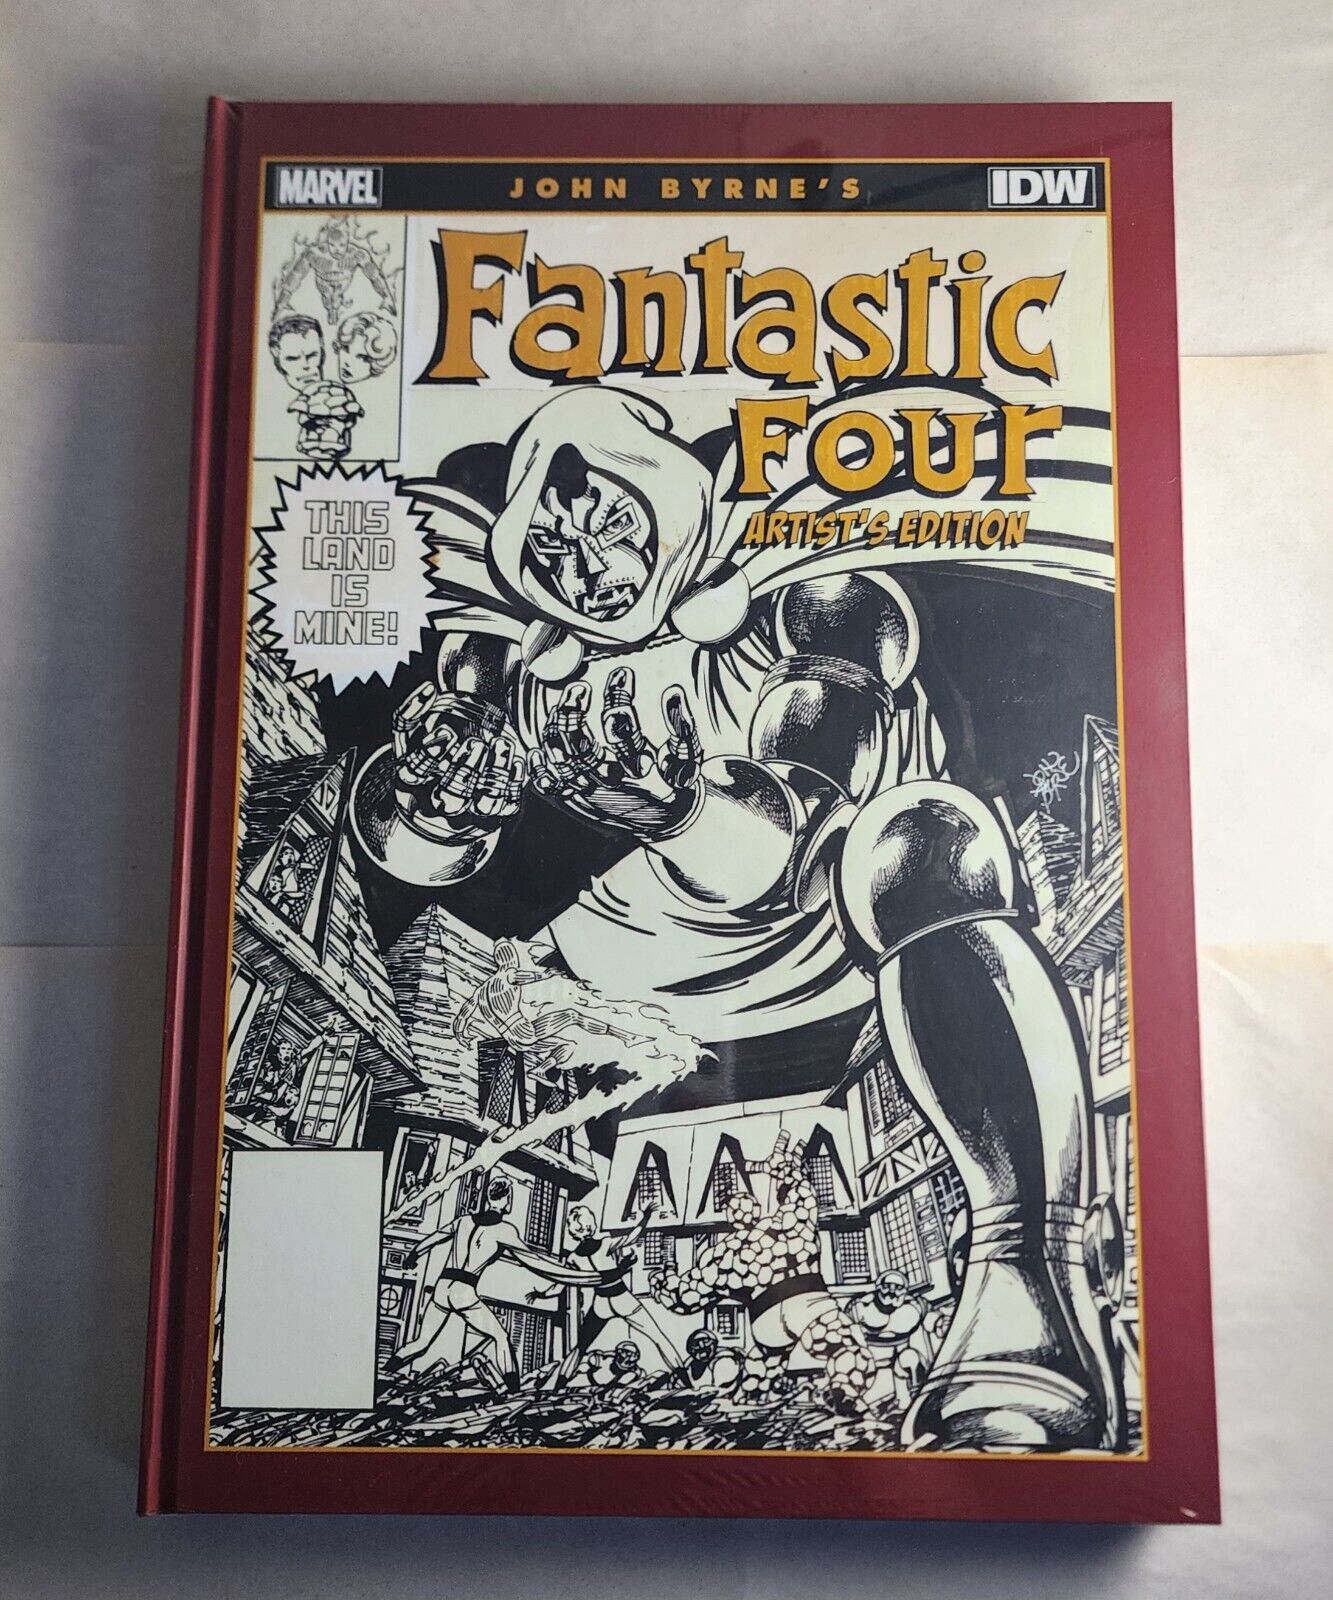 John Byrne's Fantastic Four Artist's Edition IDW Marvel HC